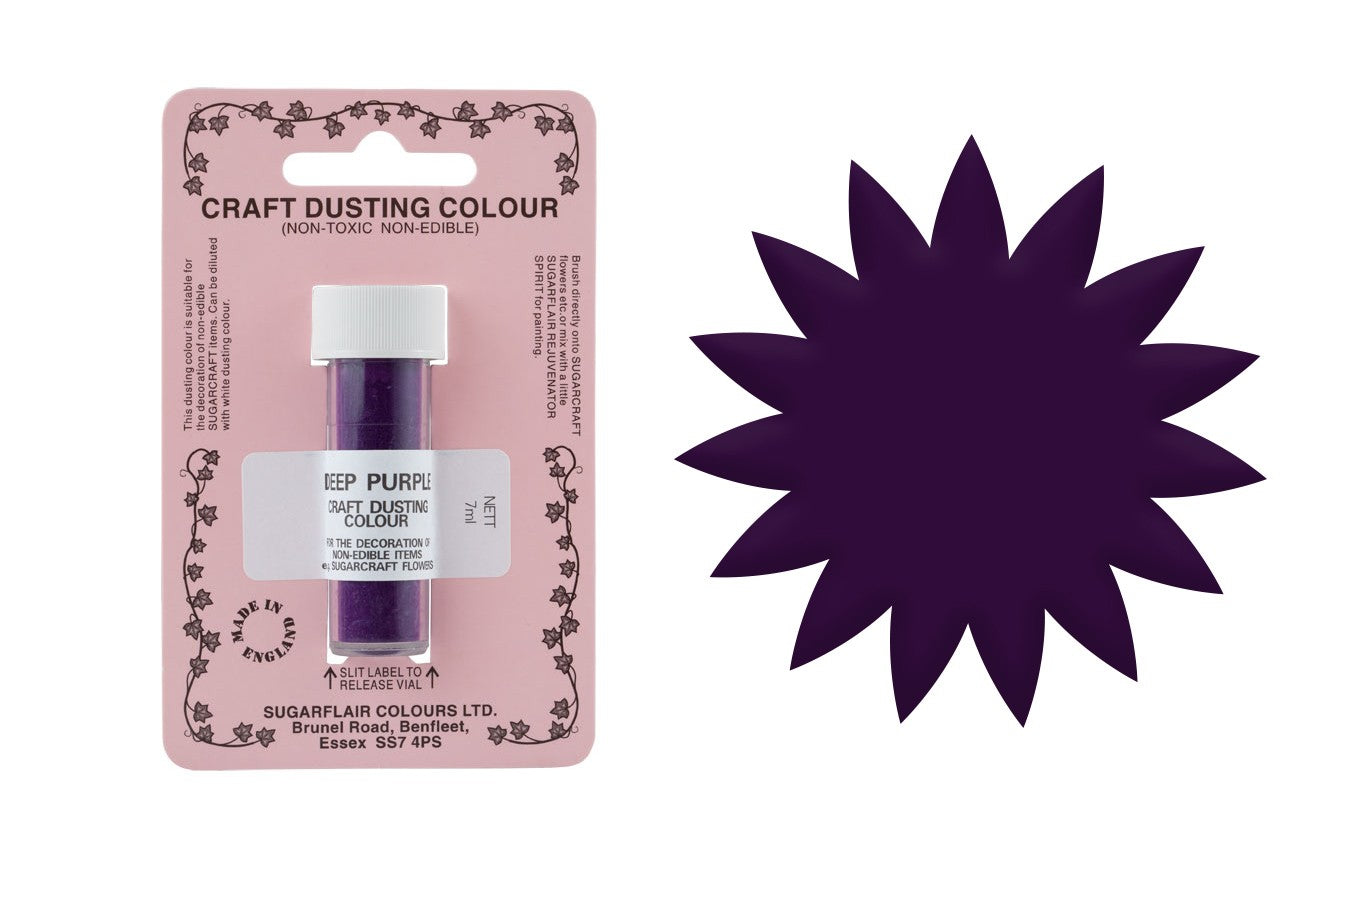 Sugarflair Craft Dusting Colour Powder: Non-Toxic, Non-Edible Deep Purple - The Cooks Cupboard Ltd